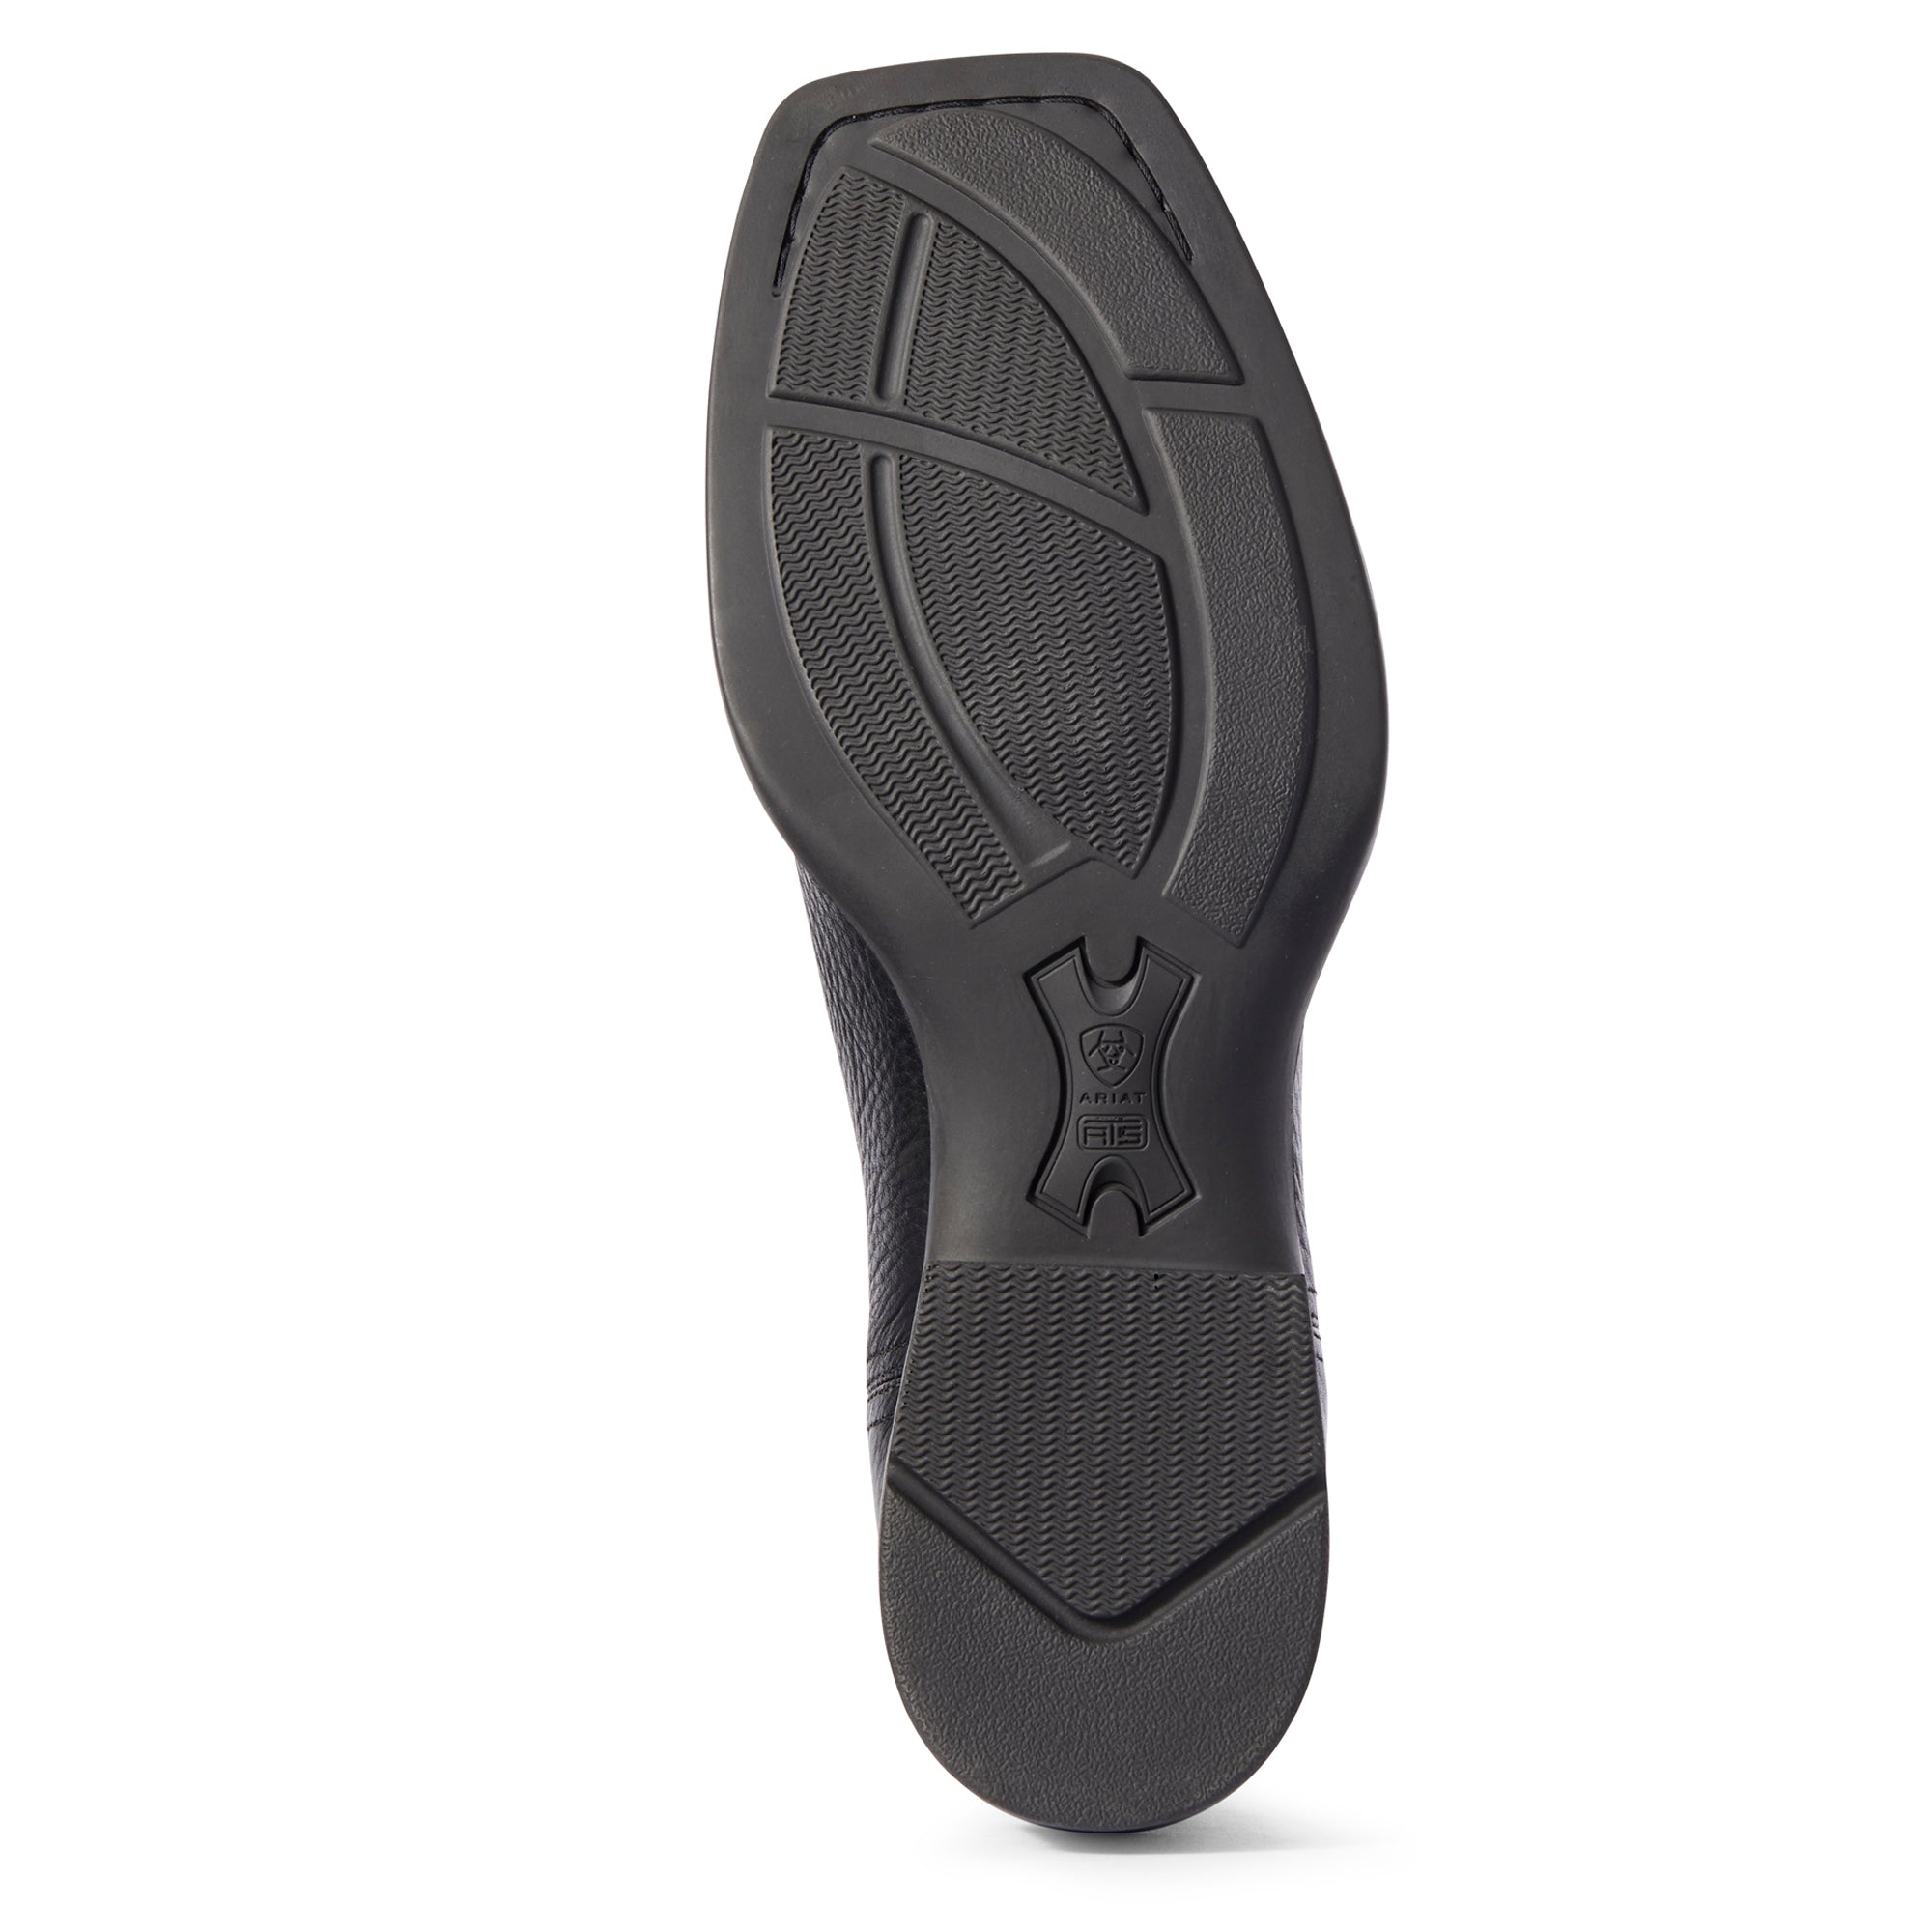 Black booker ultra western boot rubber sole